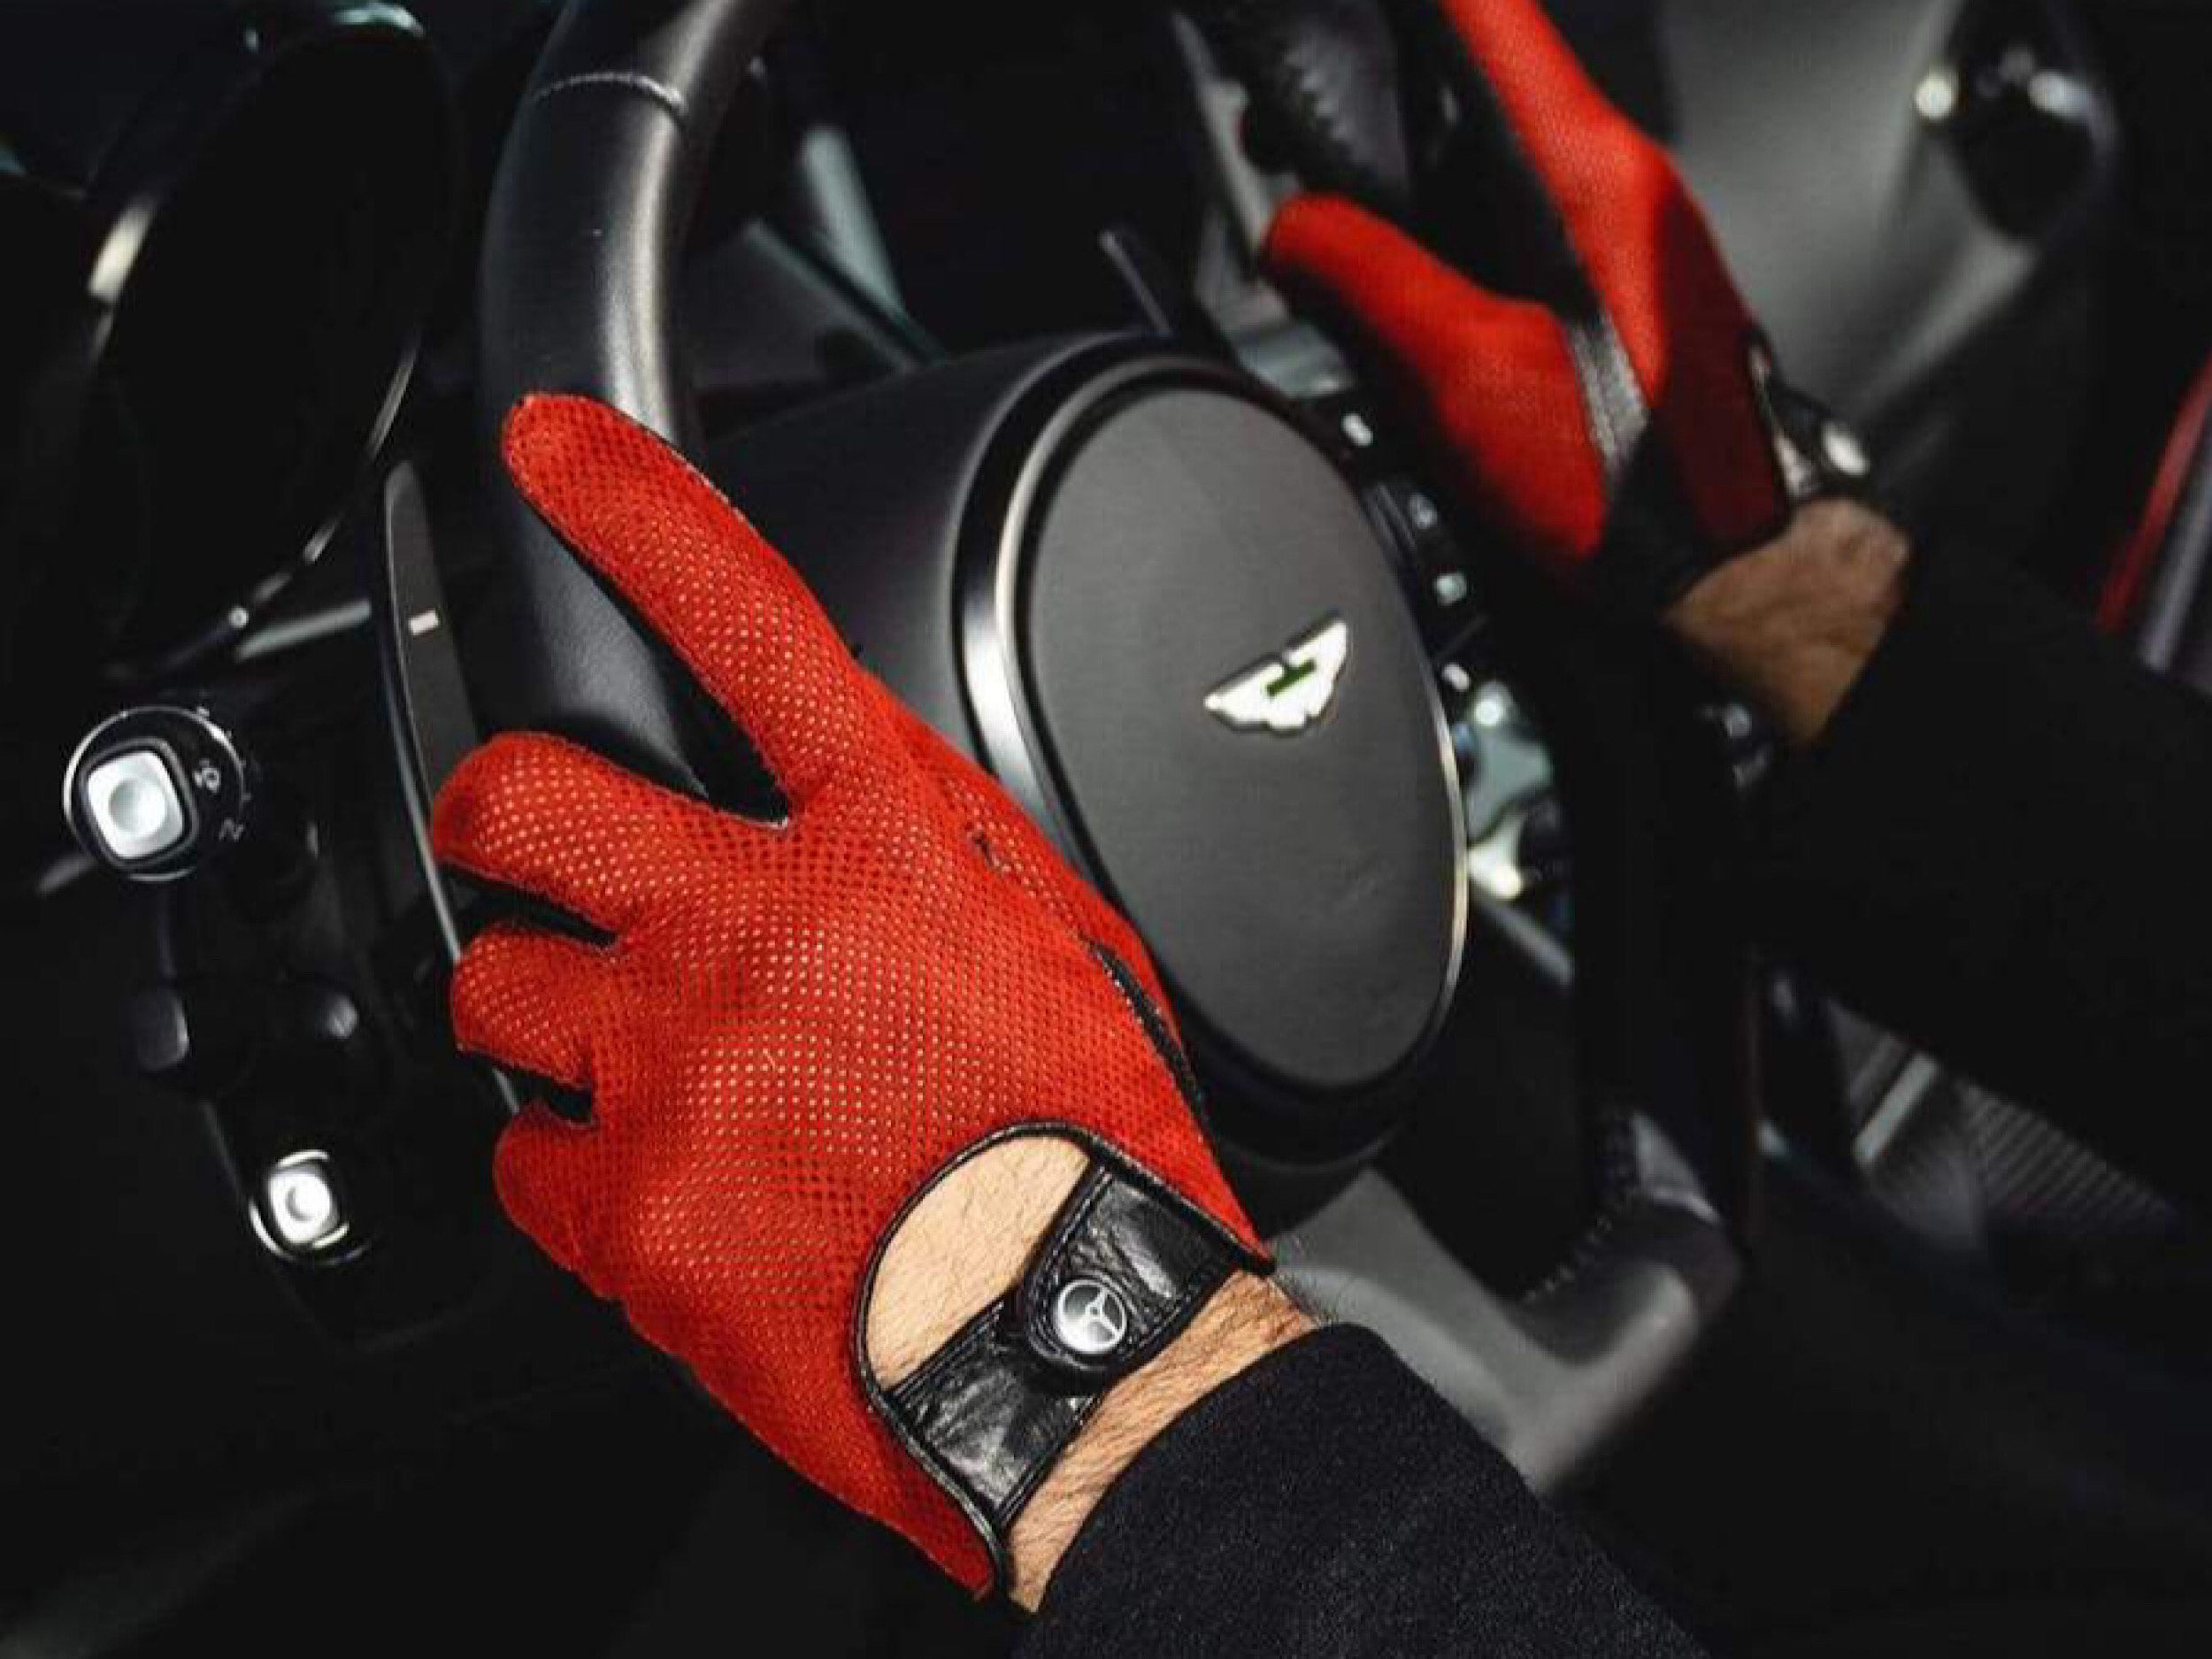 The Outlierman Aston Martin driving gloves